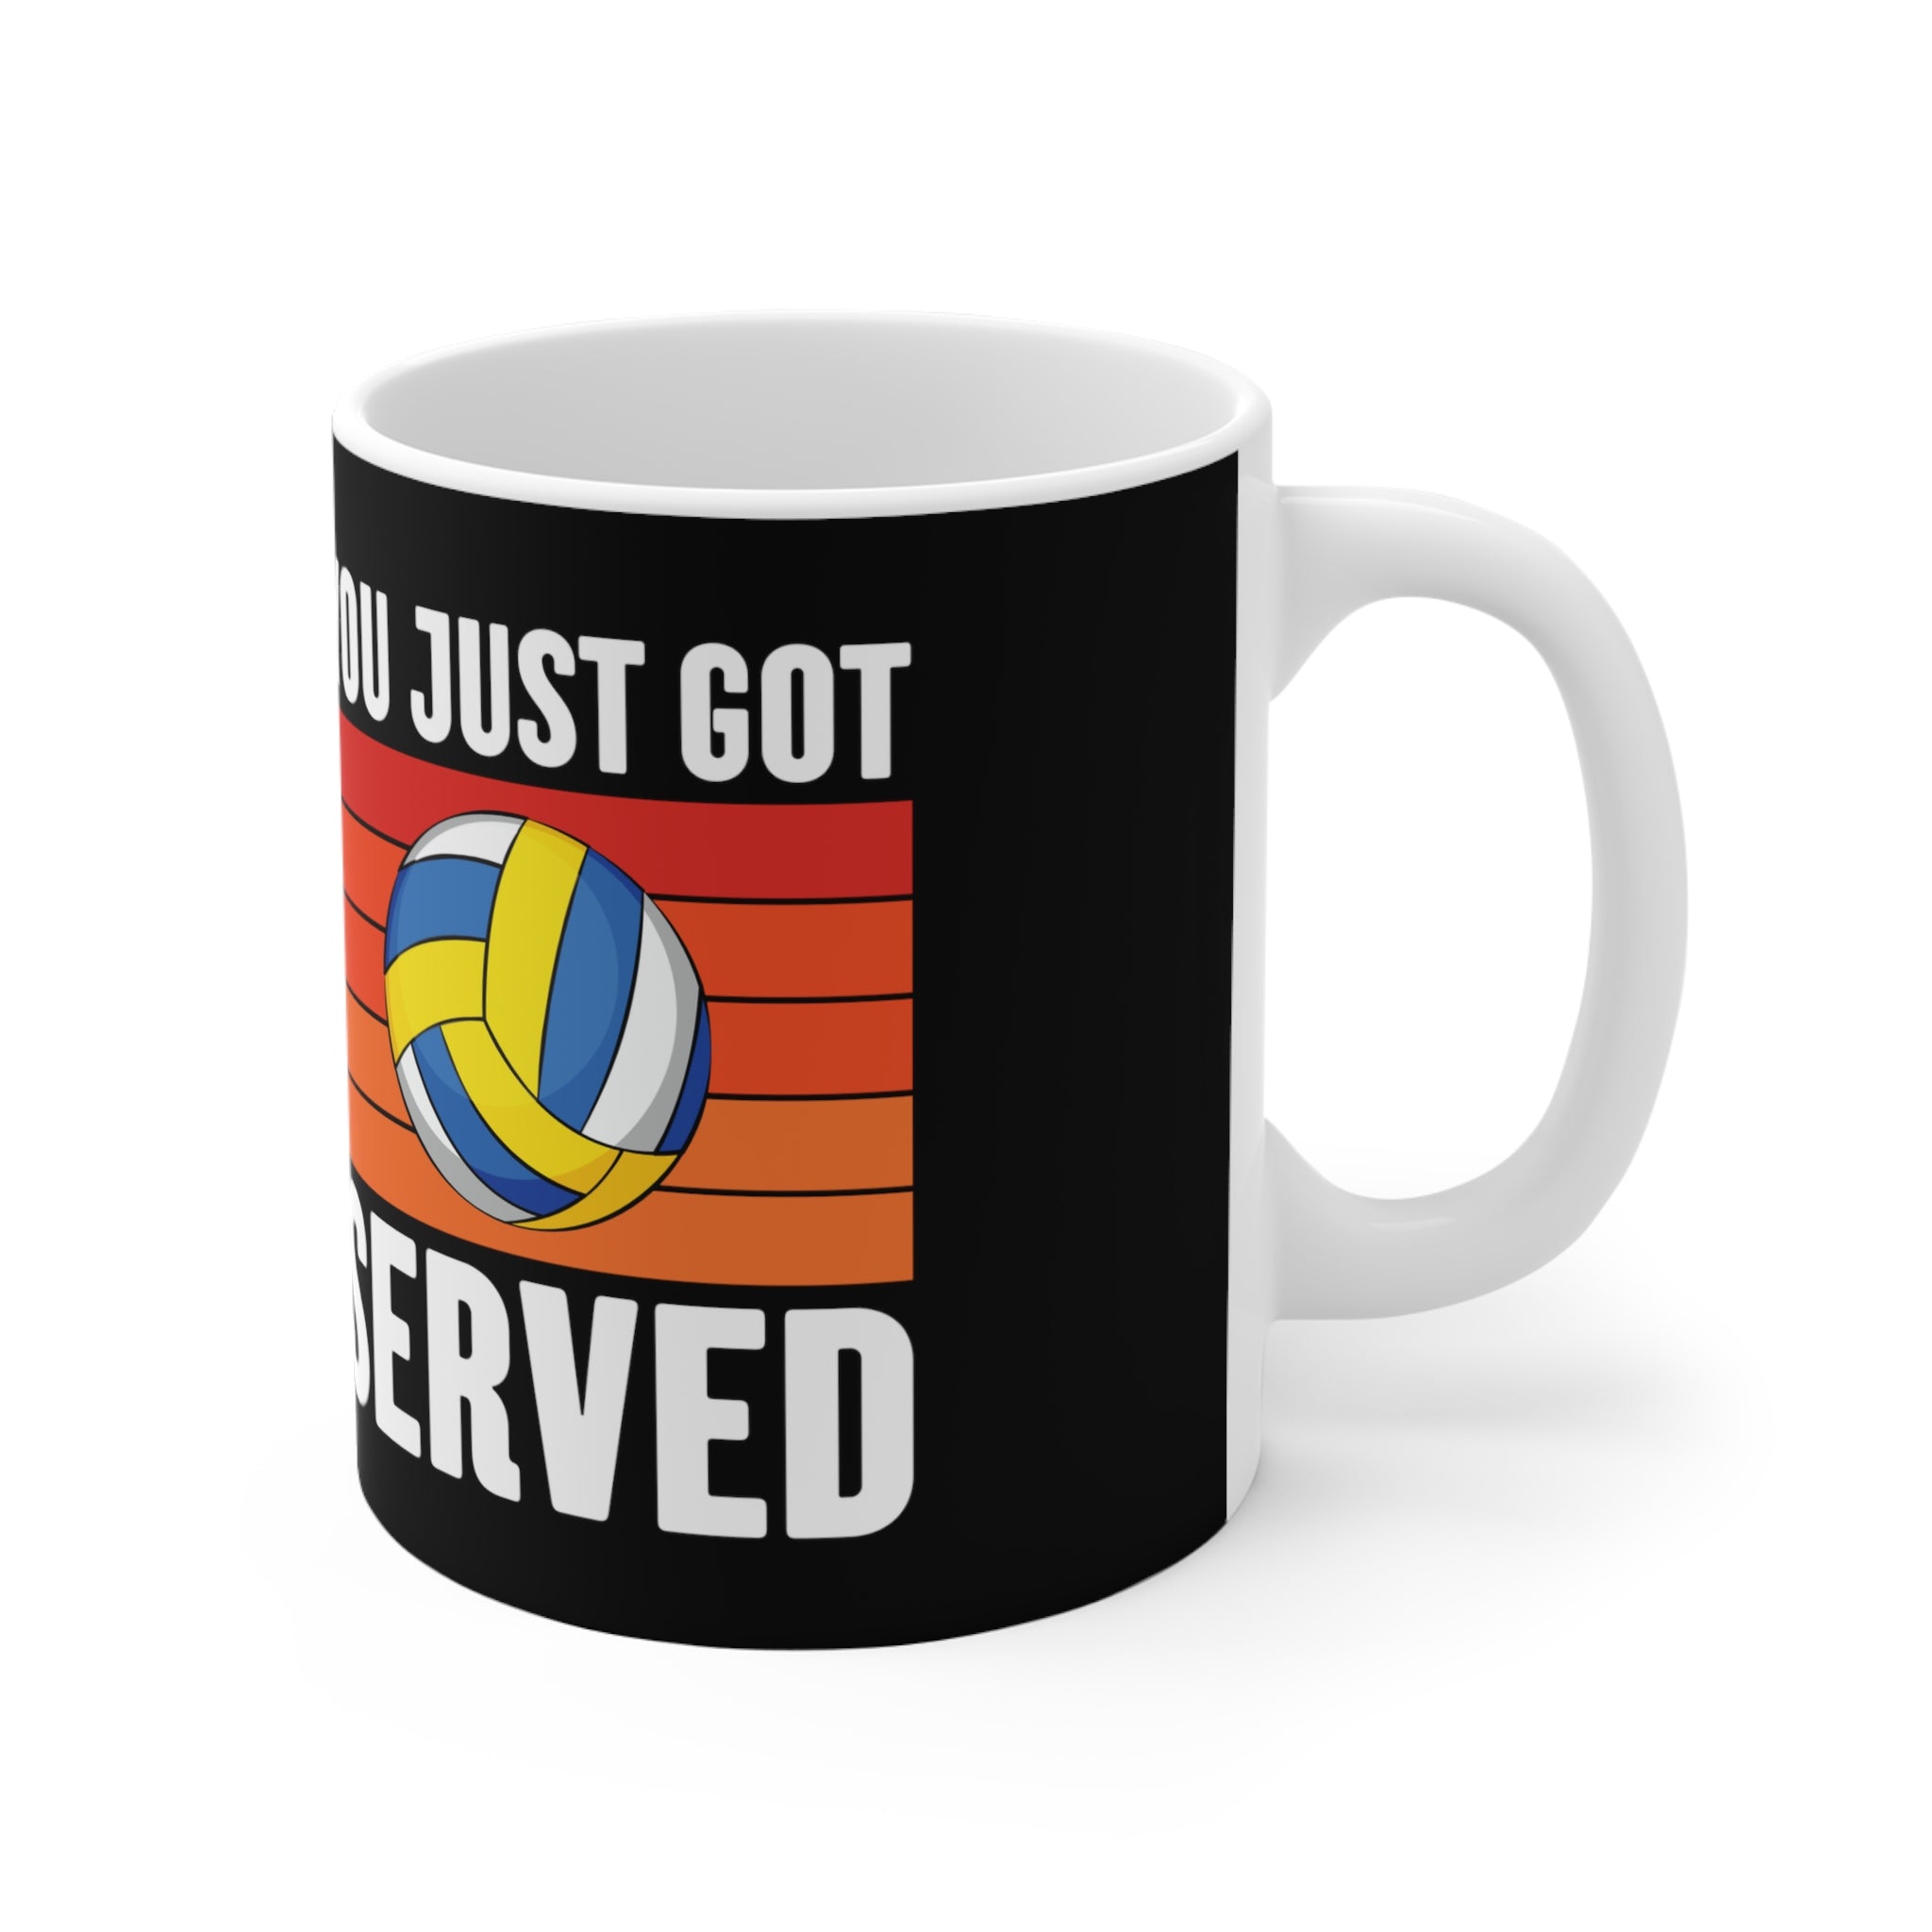 You Just Got Served  Volleyball Mug